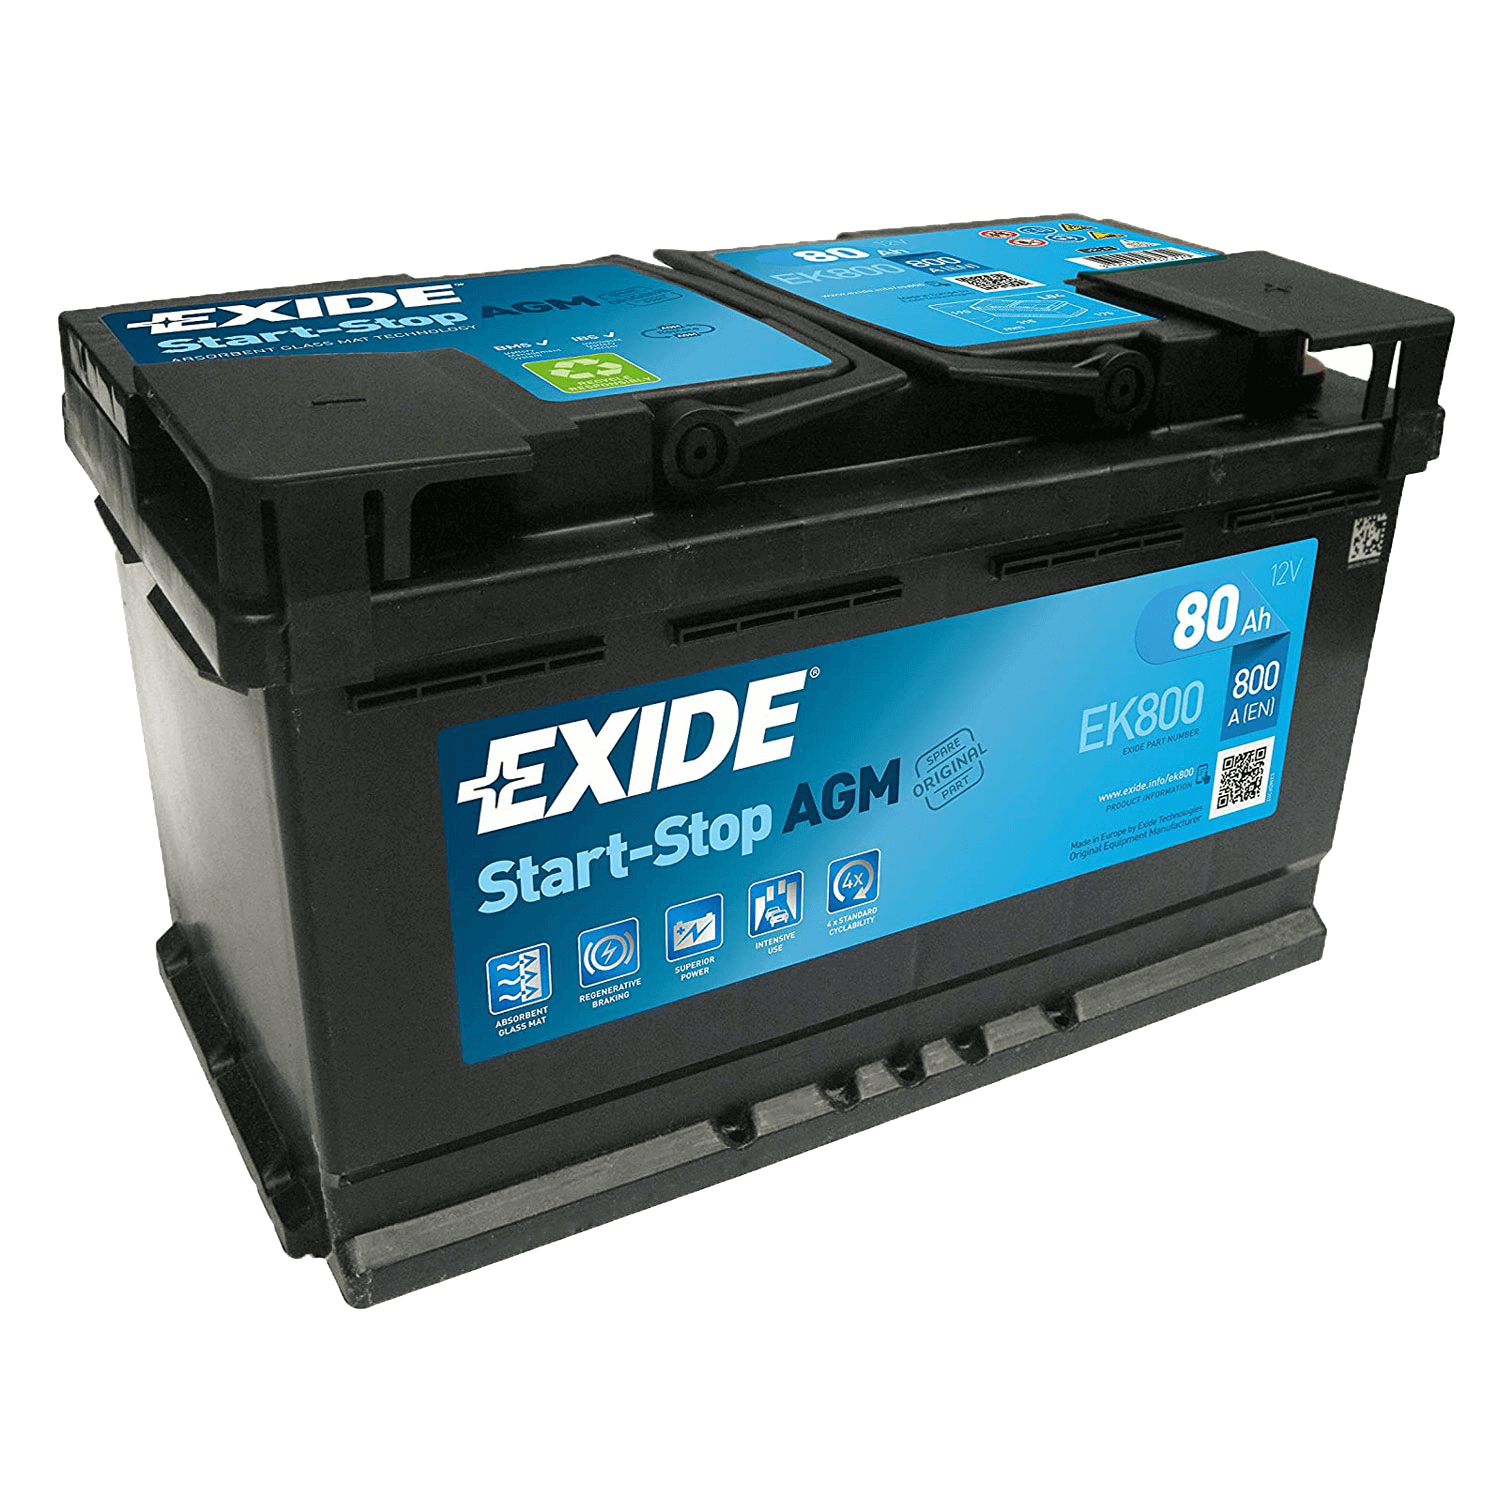 EXIDE EB442 EXCELL Autobatterie Batterie Starterbatterie 12V 44Ah